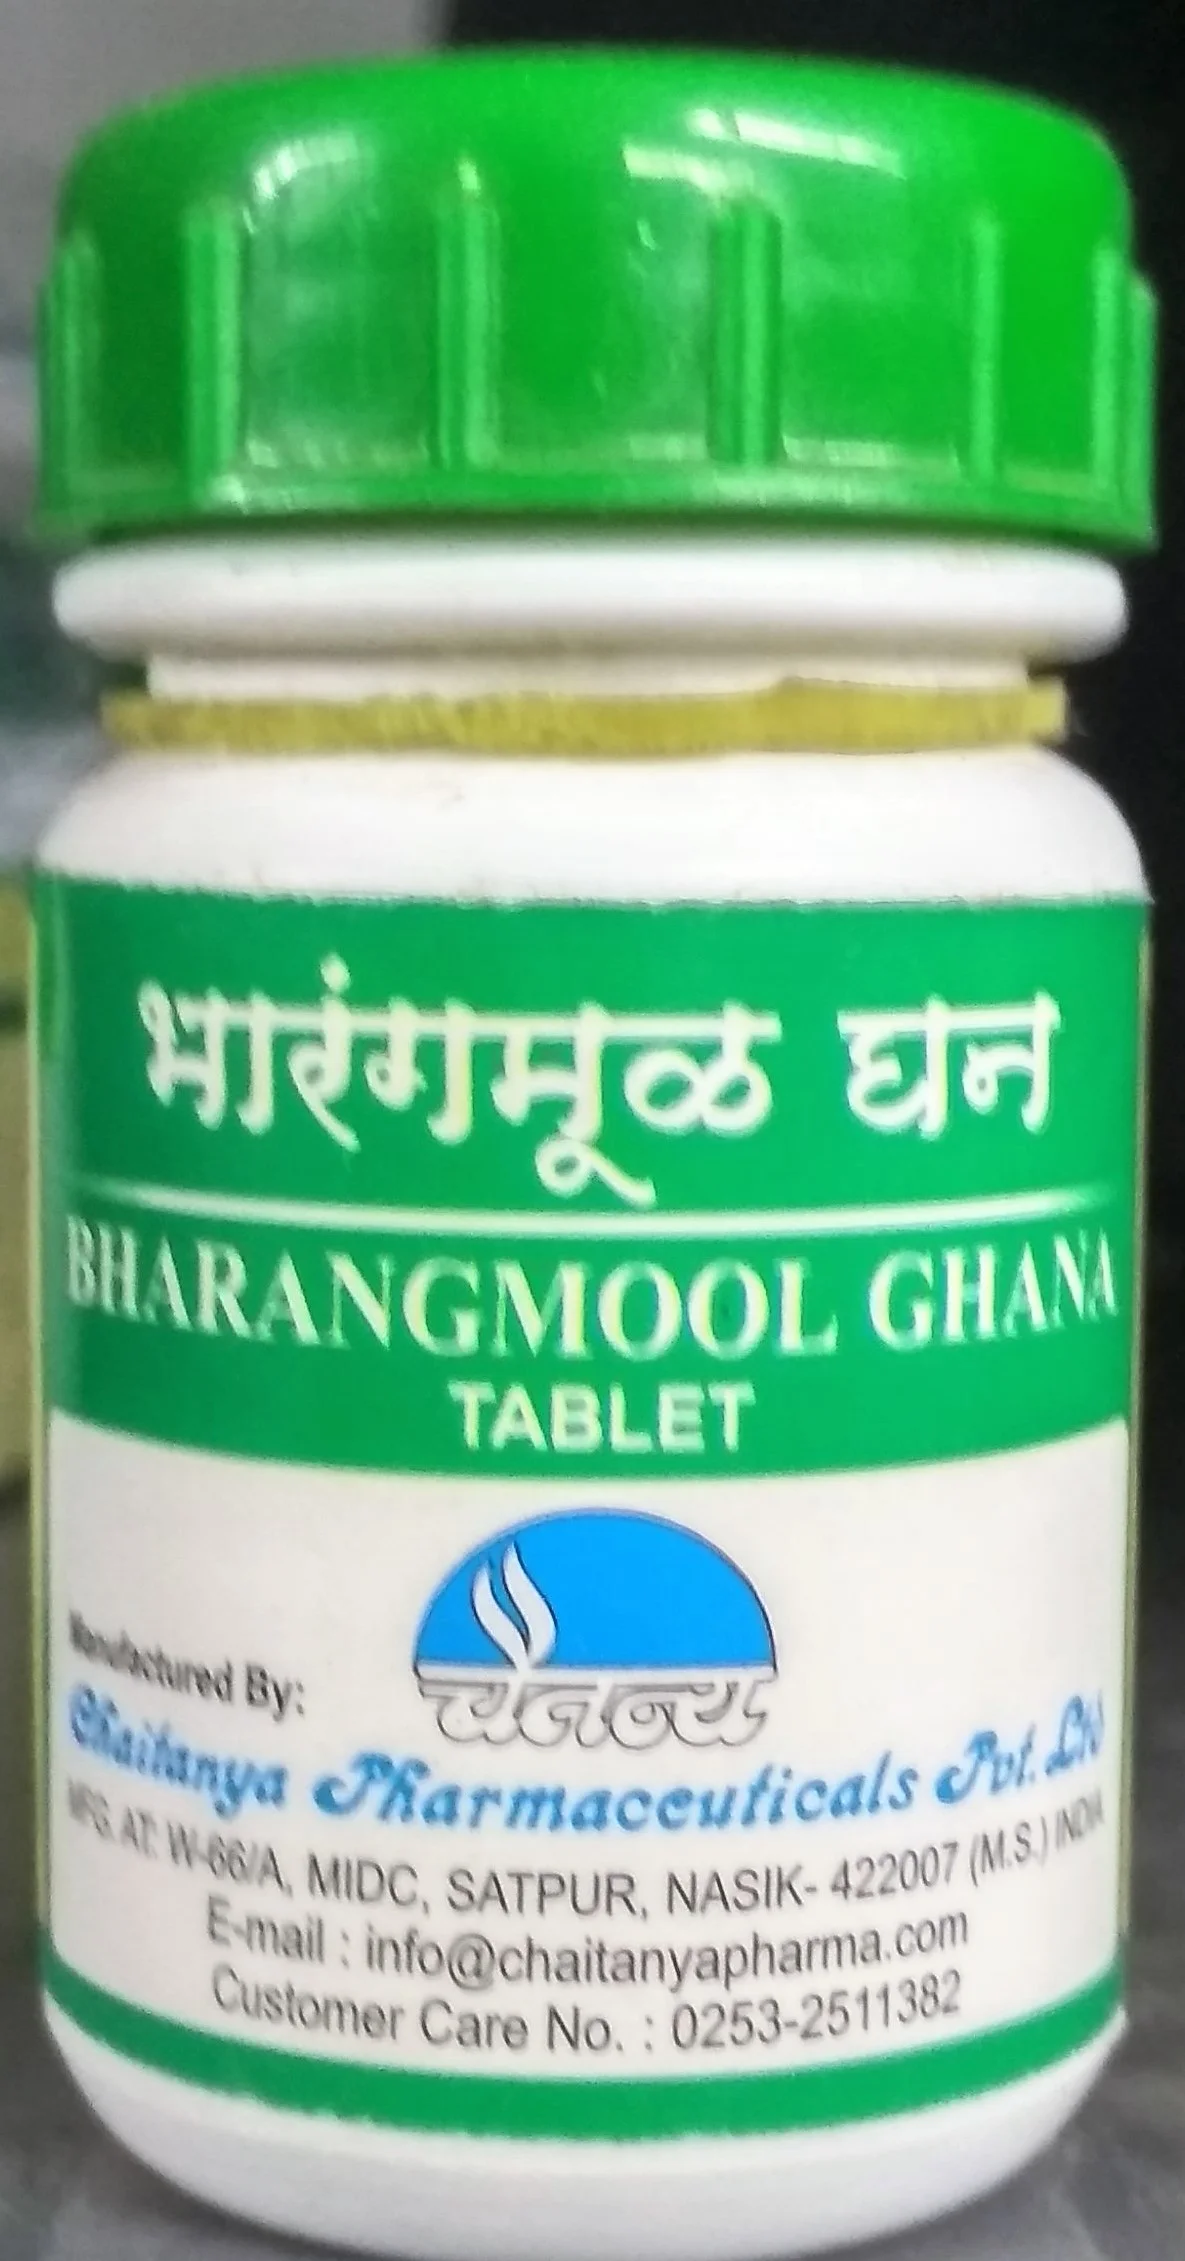 bharangmool ghana 2000tab upto 20% off free shipping chaitanya pharmaceuticals